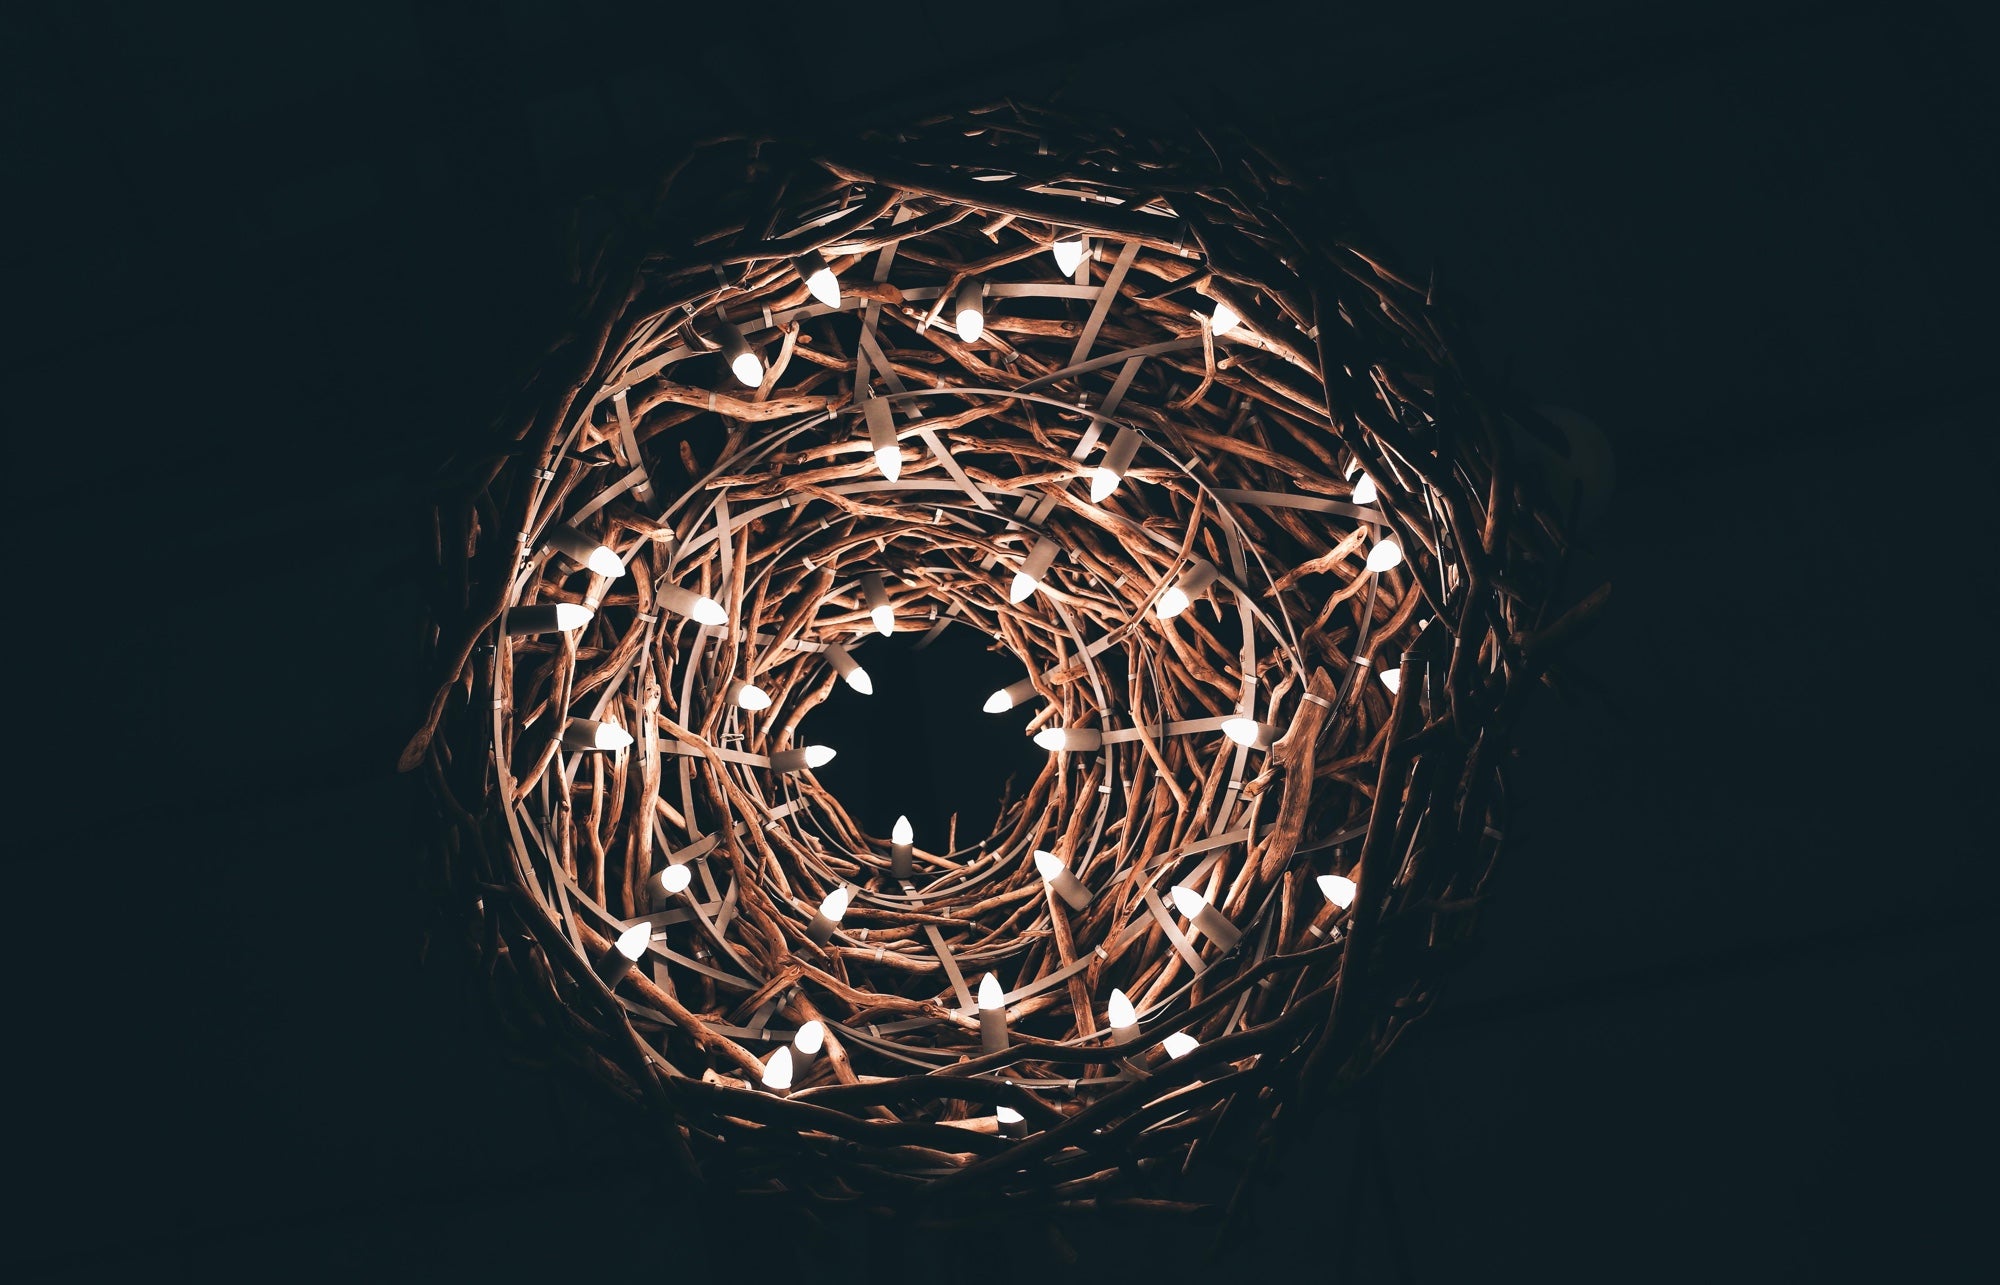 A nest of LED string lights